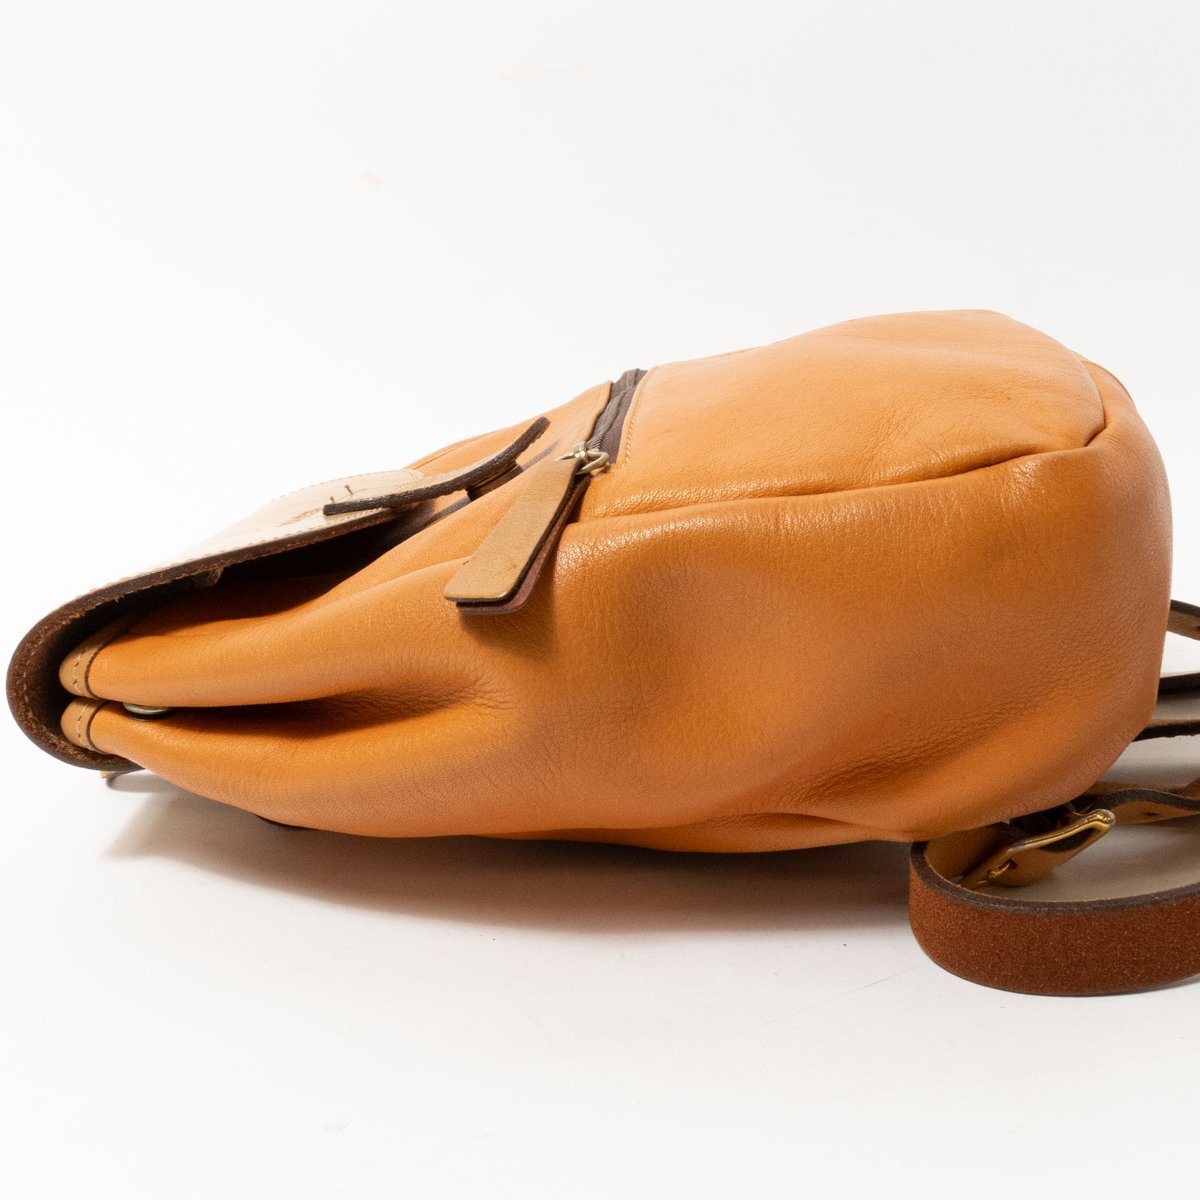 [1 jpy start ]SOMES SADDLEso female saddle rucksack backpack Mini size leather original leather Camel magnet opening and closing lady's bag 